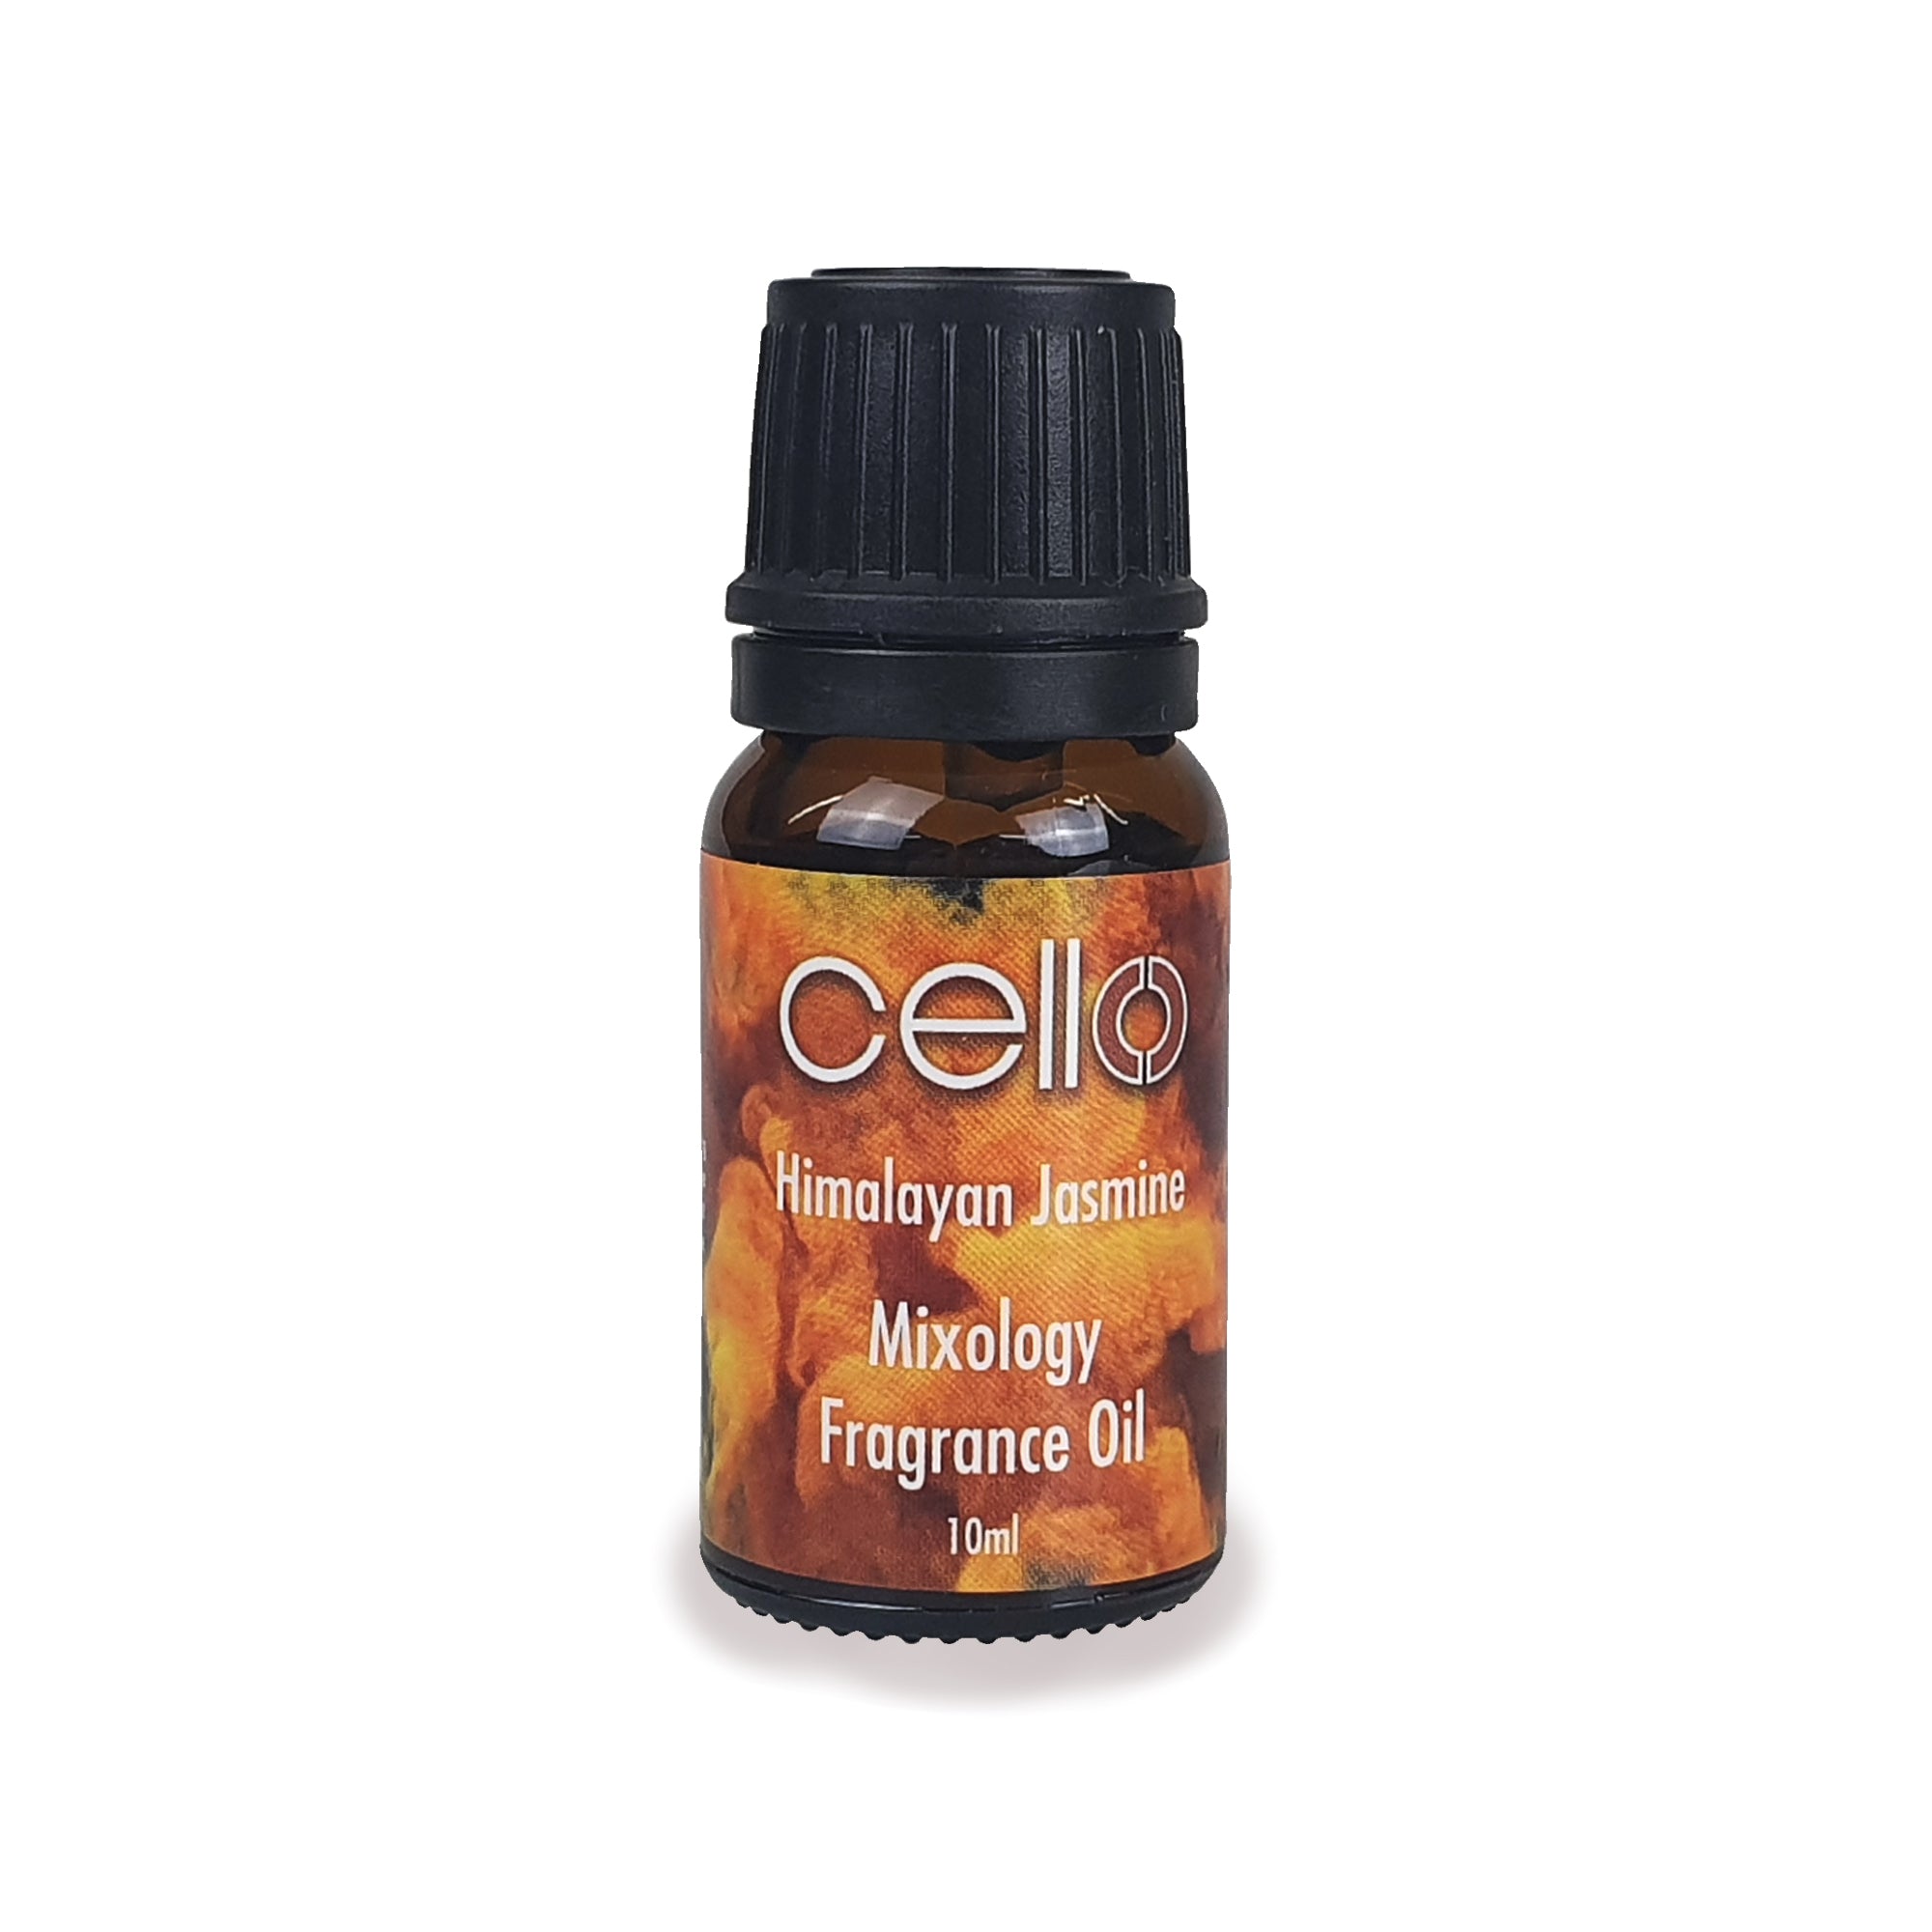 Cello - Mixology Fragrance Oils - Himalayan Jasmine